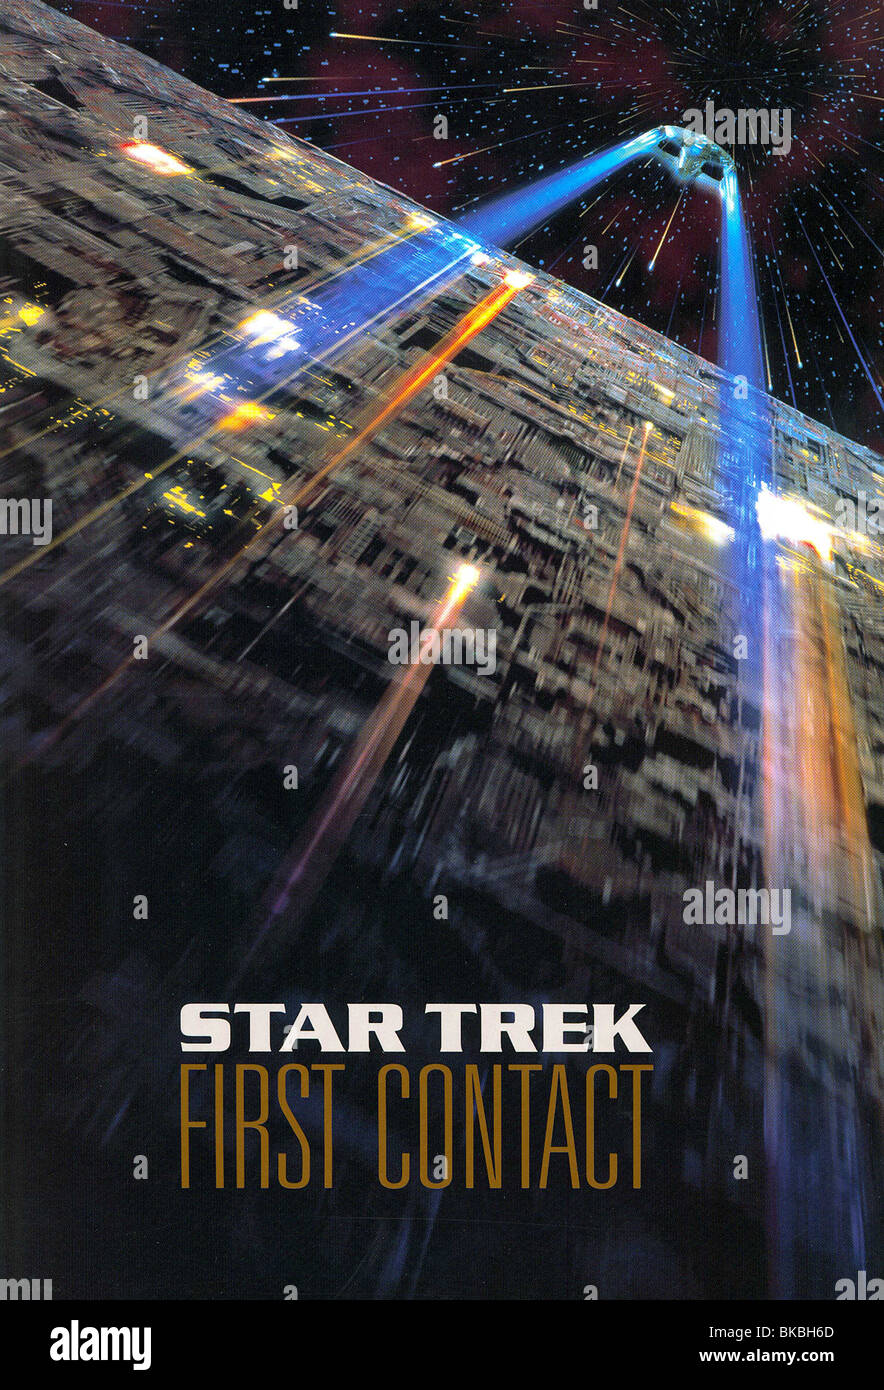 STAR TREK: FIRST CONTACT (1996) POSTER STFC 001PK Stock Photo